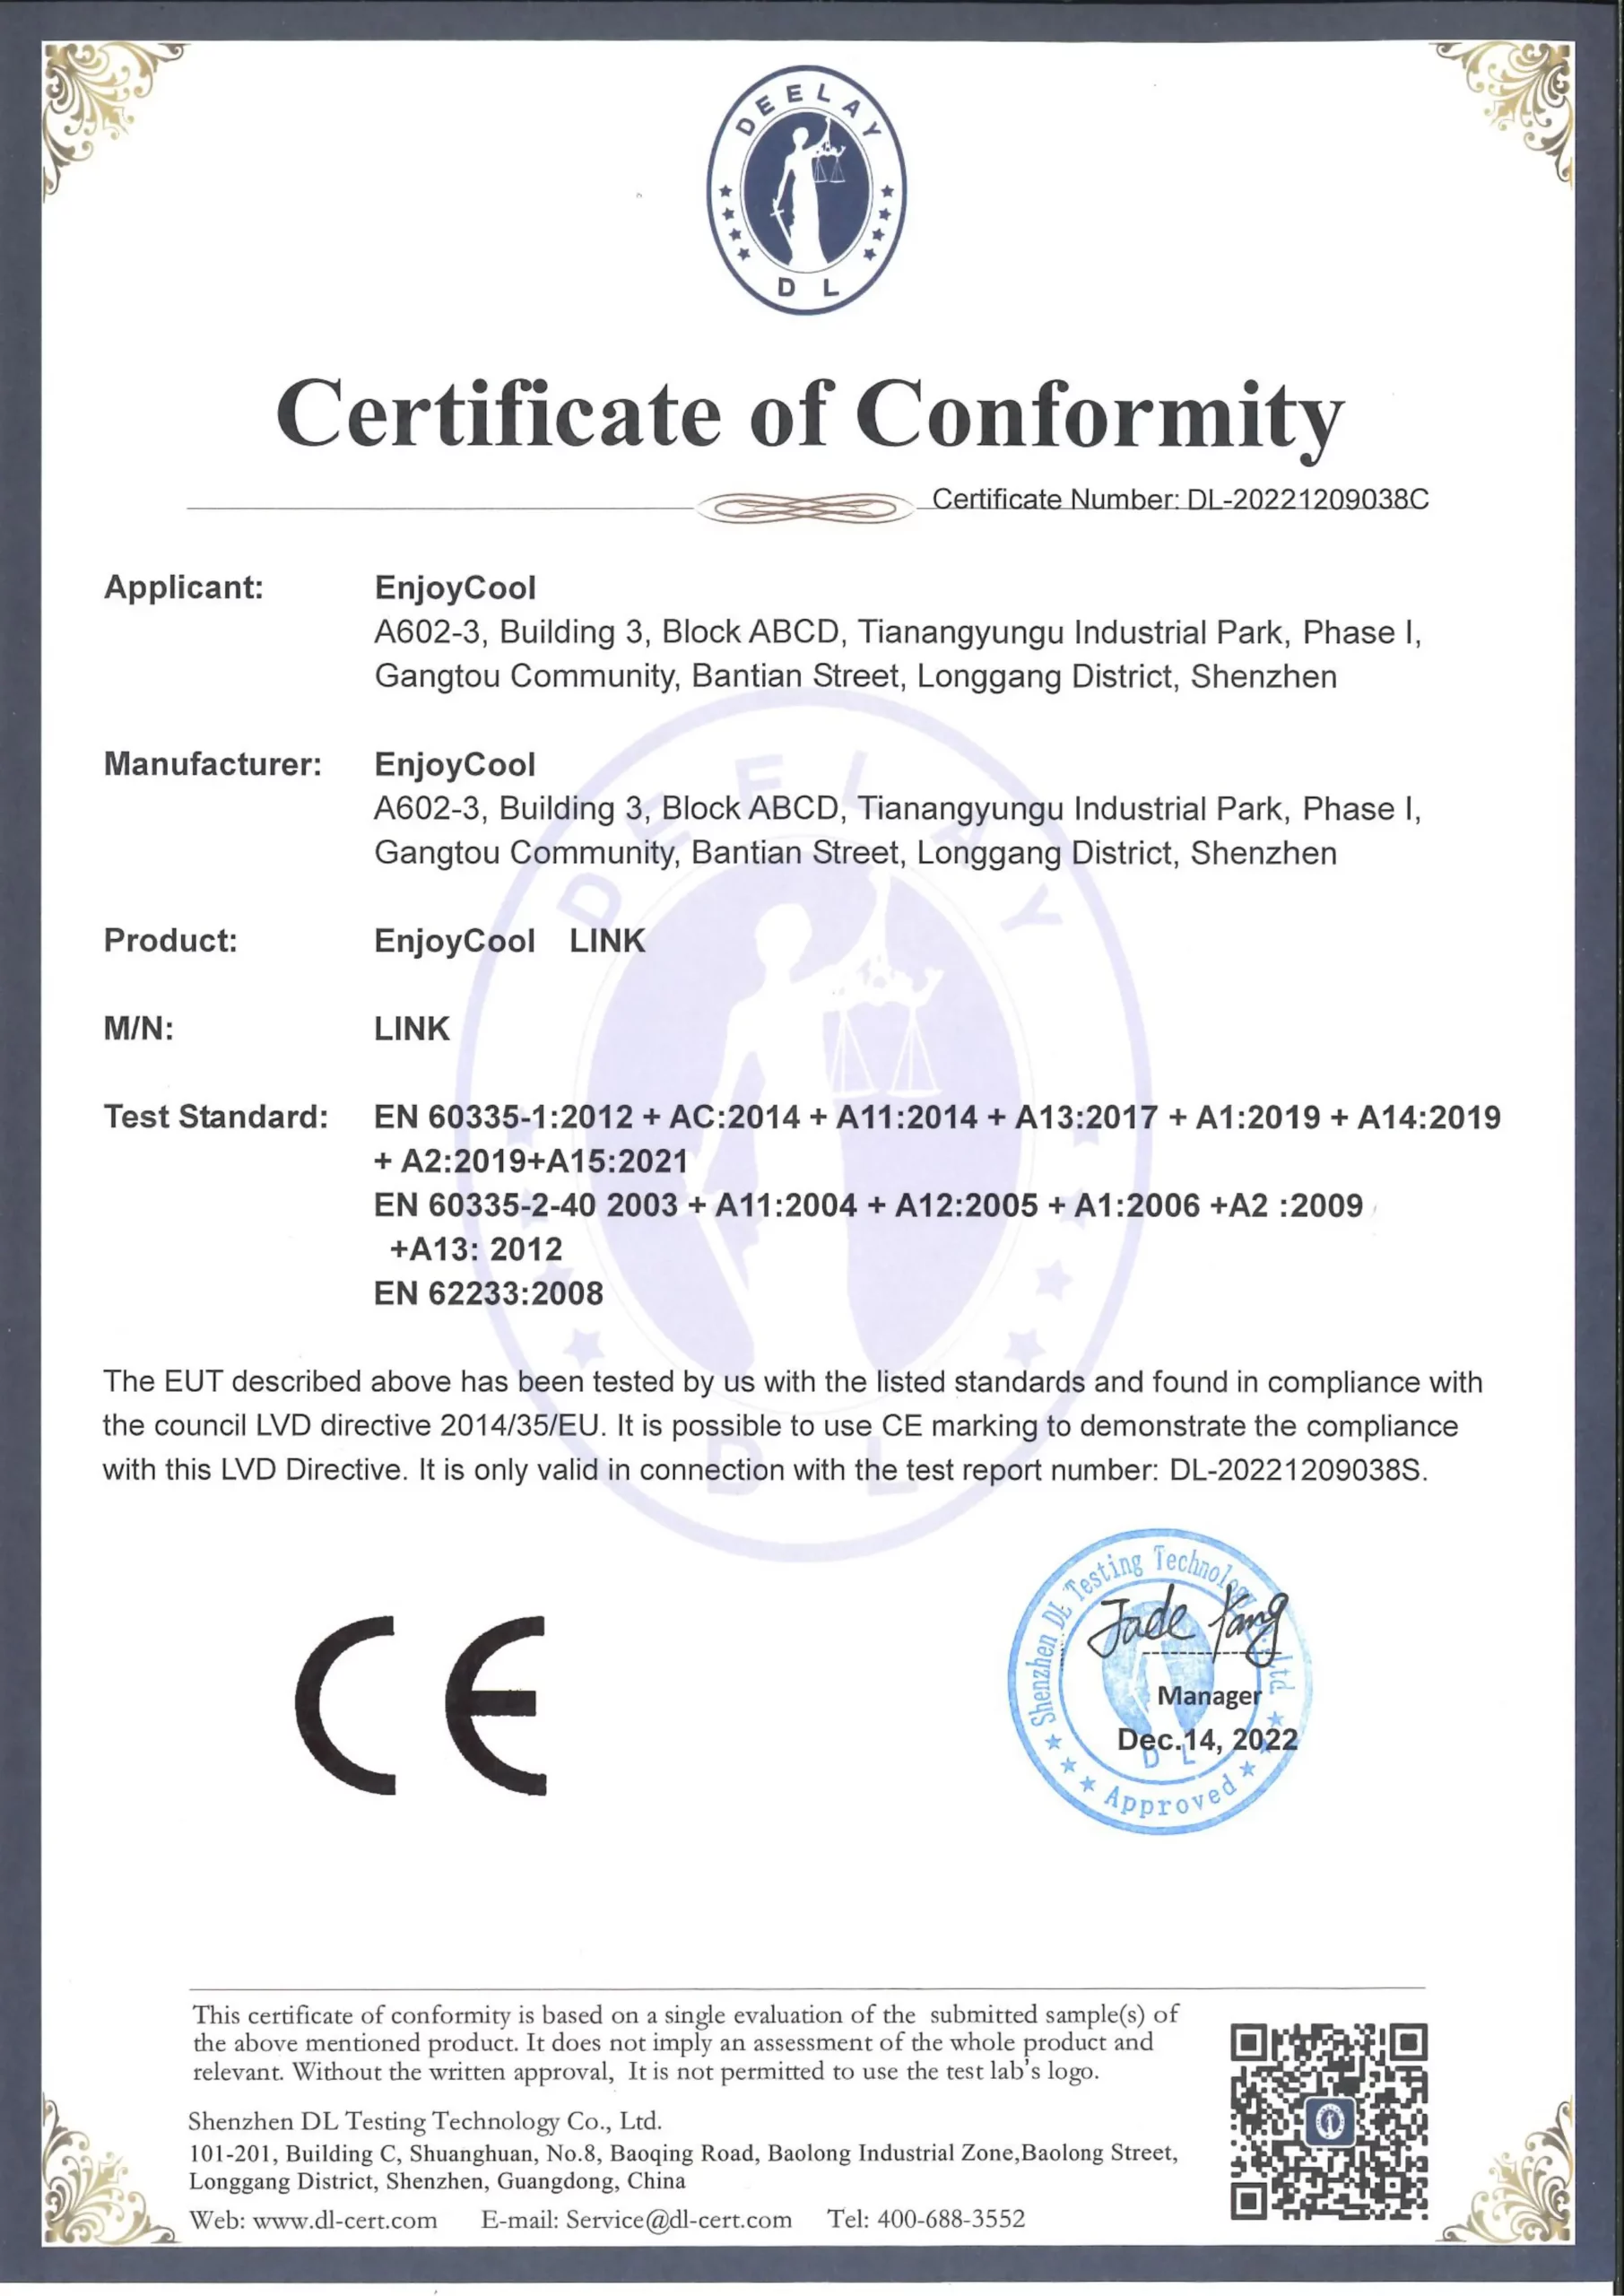 EnjoyCool Certificate of Conformity